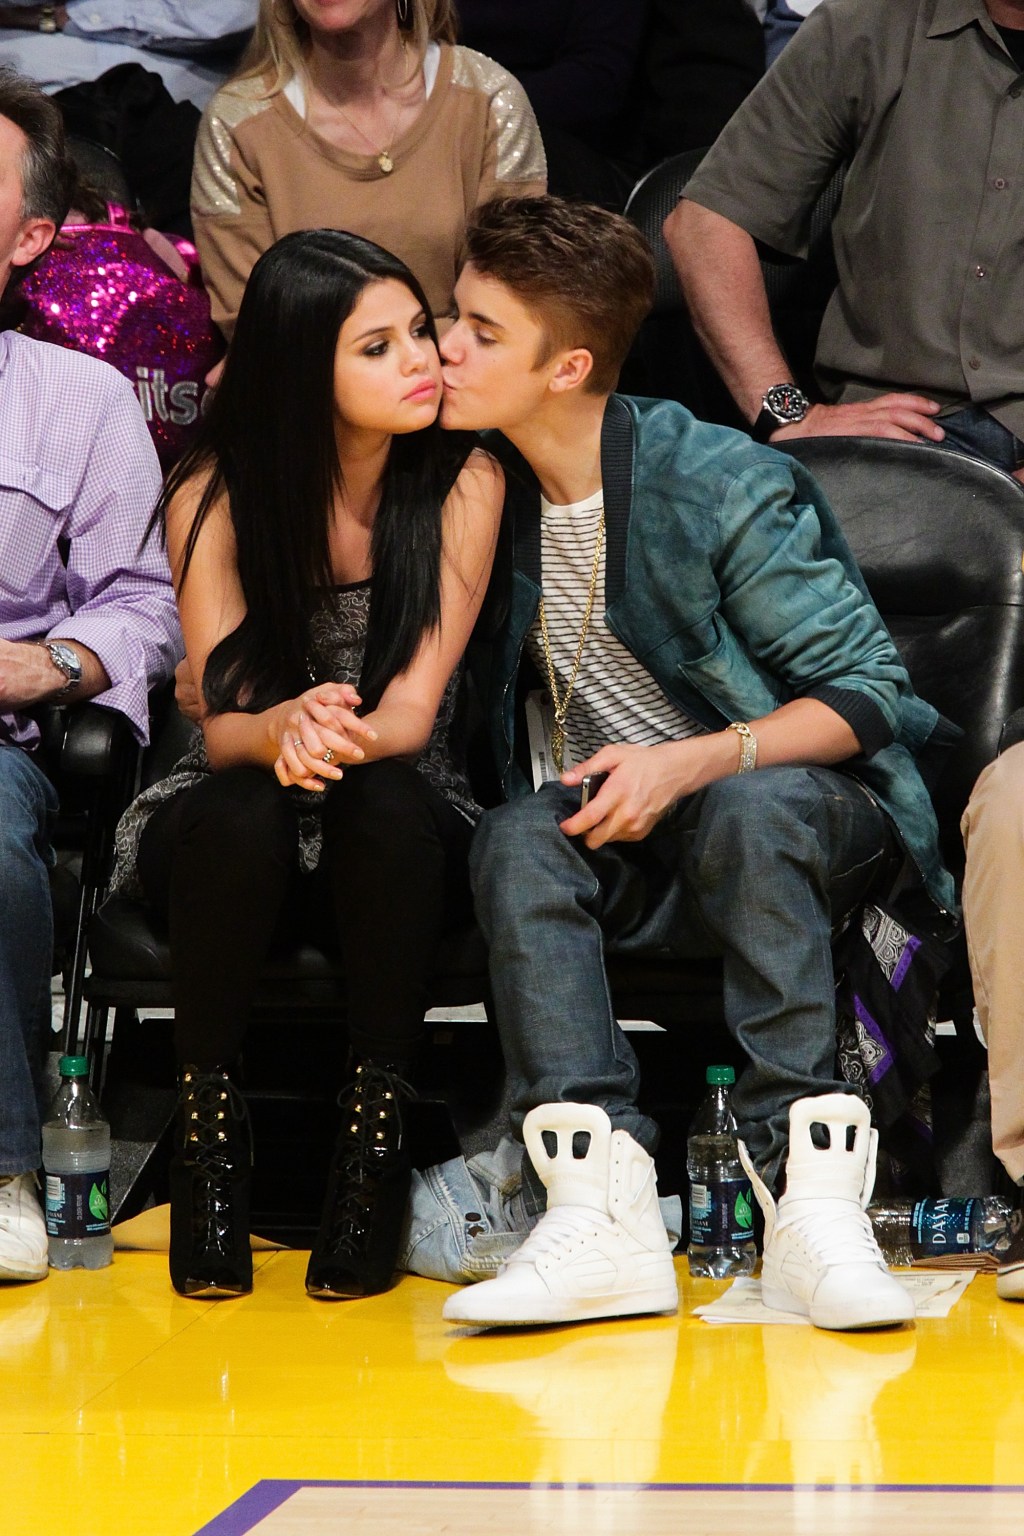 Justin Bieber and Selena Gomez kiss courtside